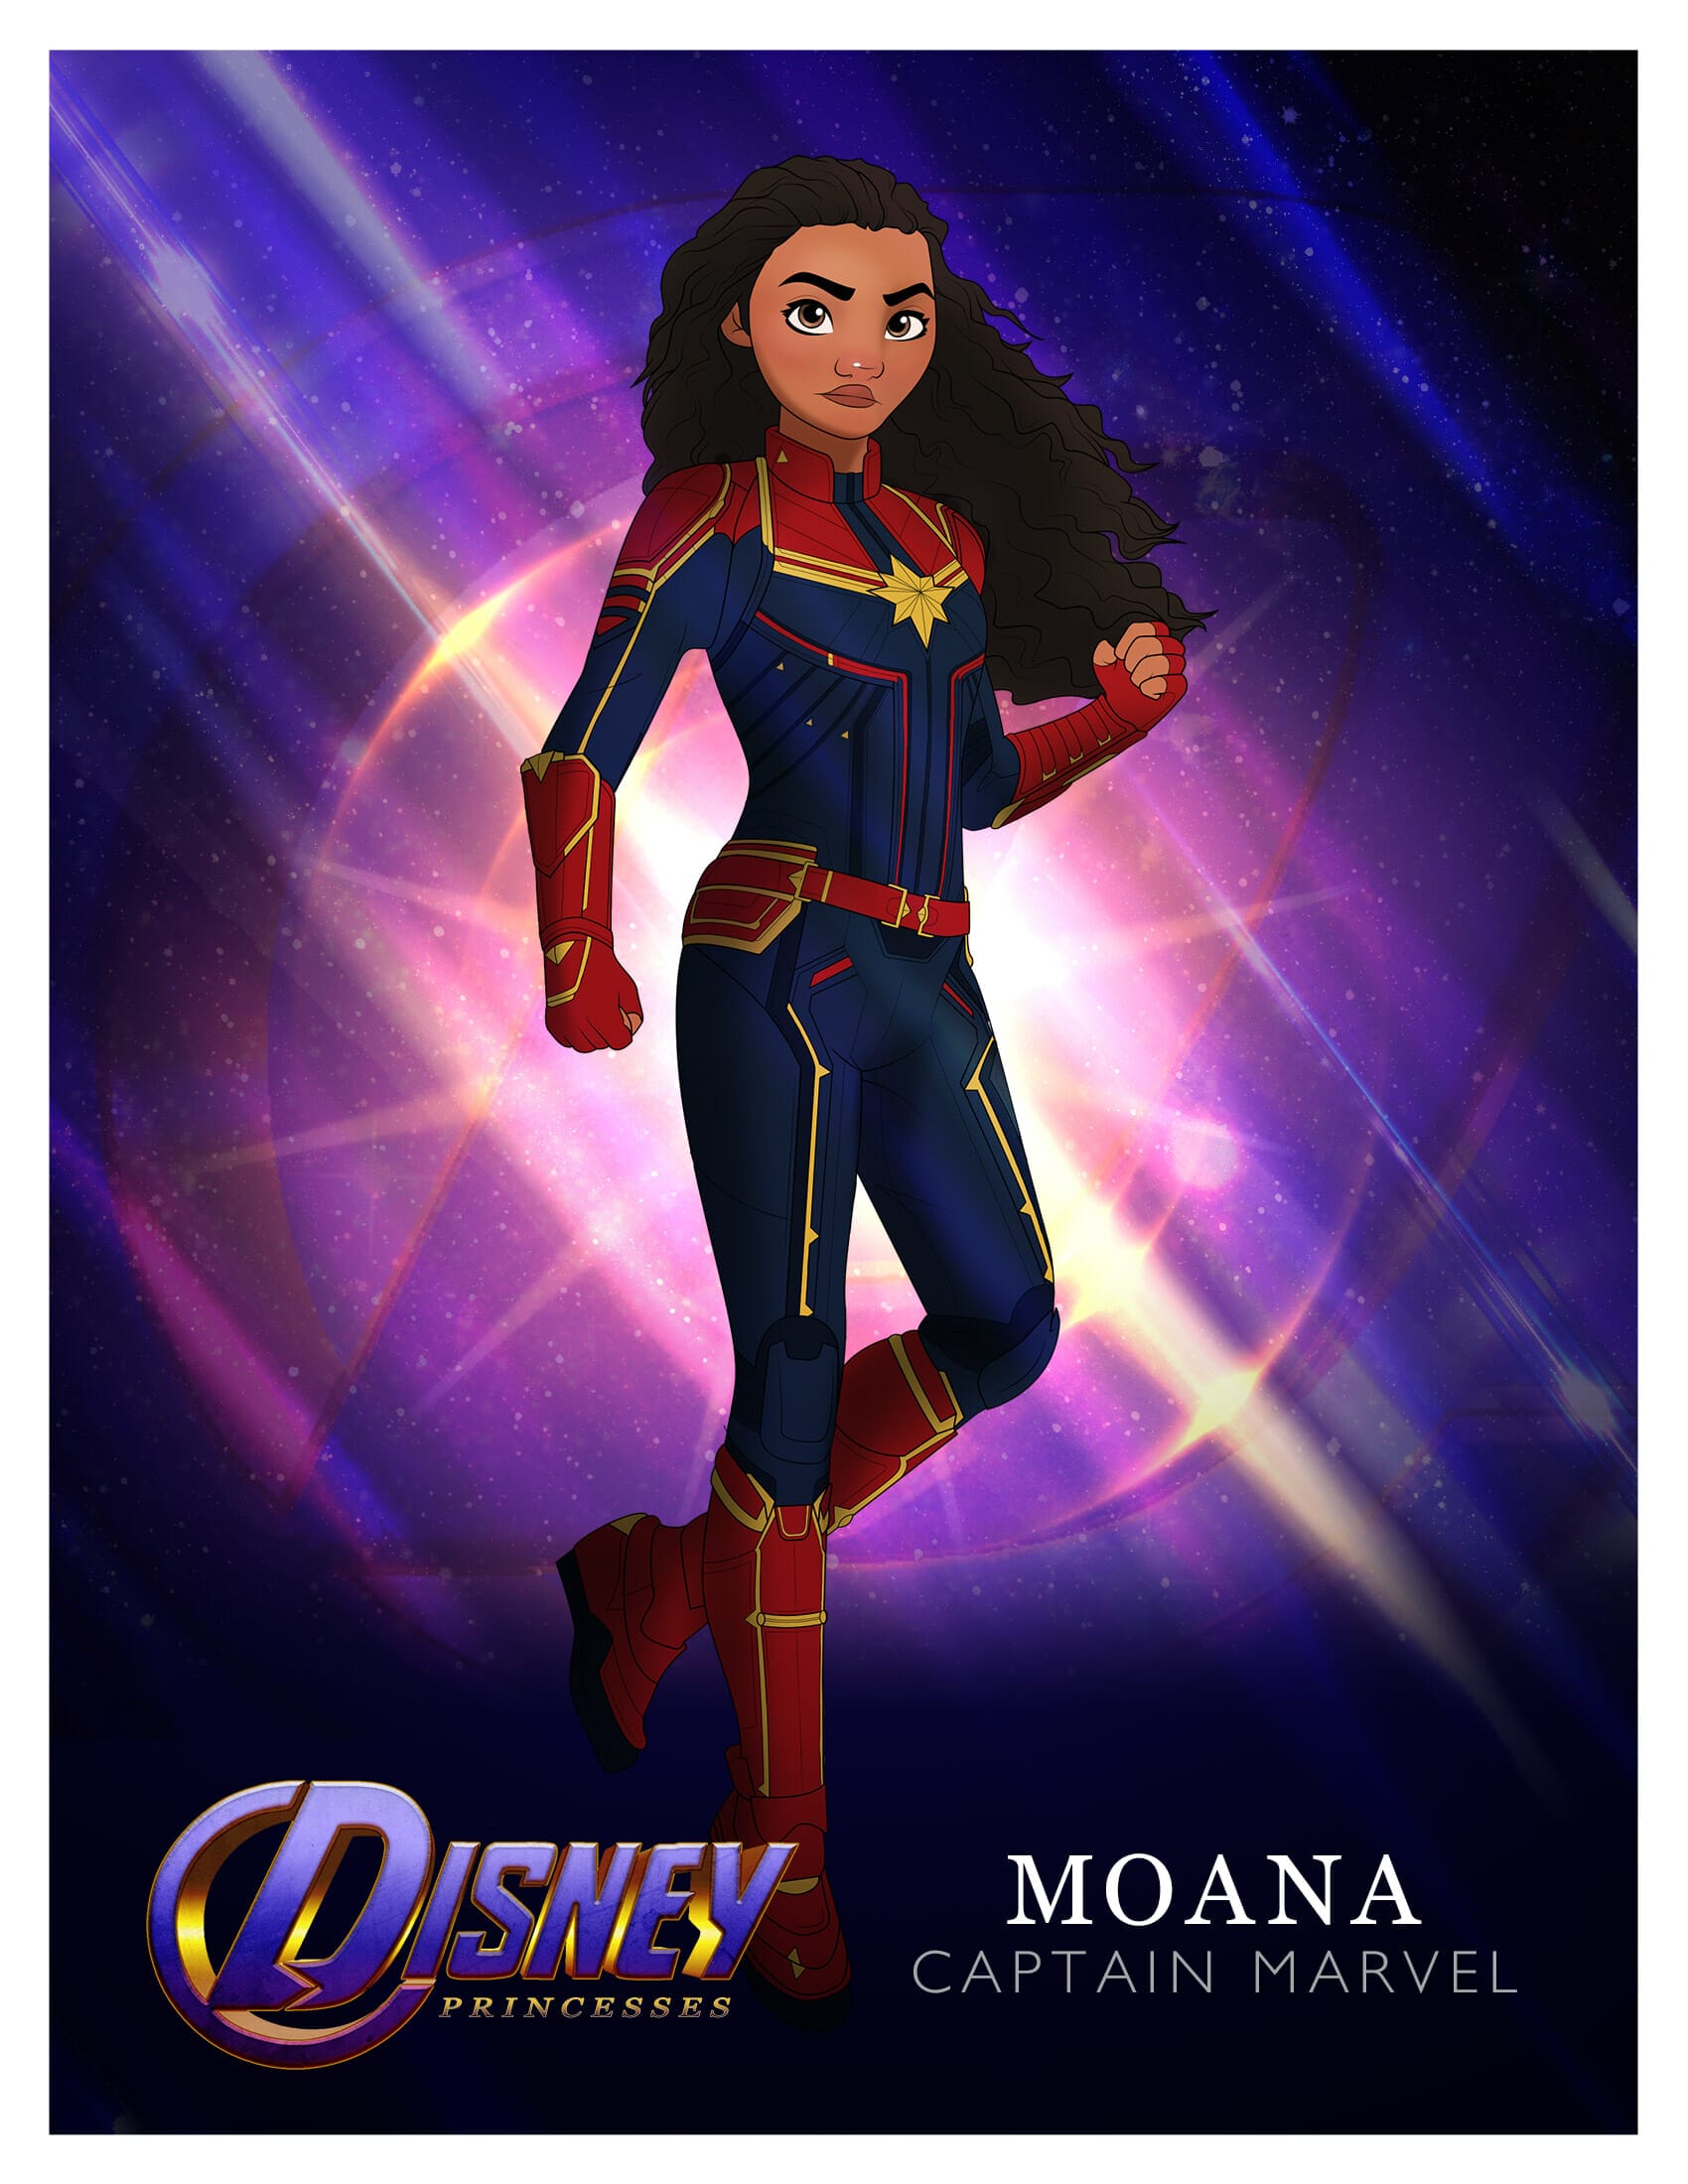 Princess Moana as Captain Marvel